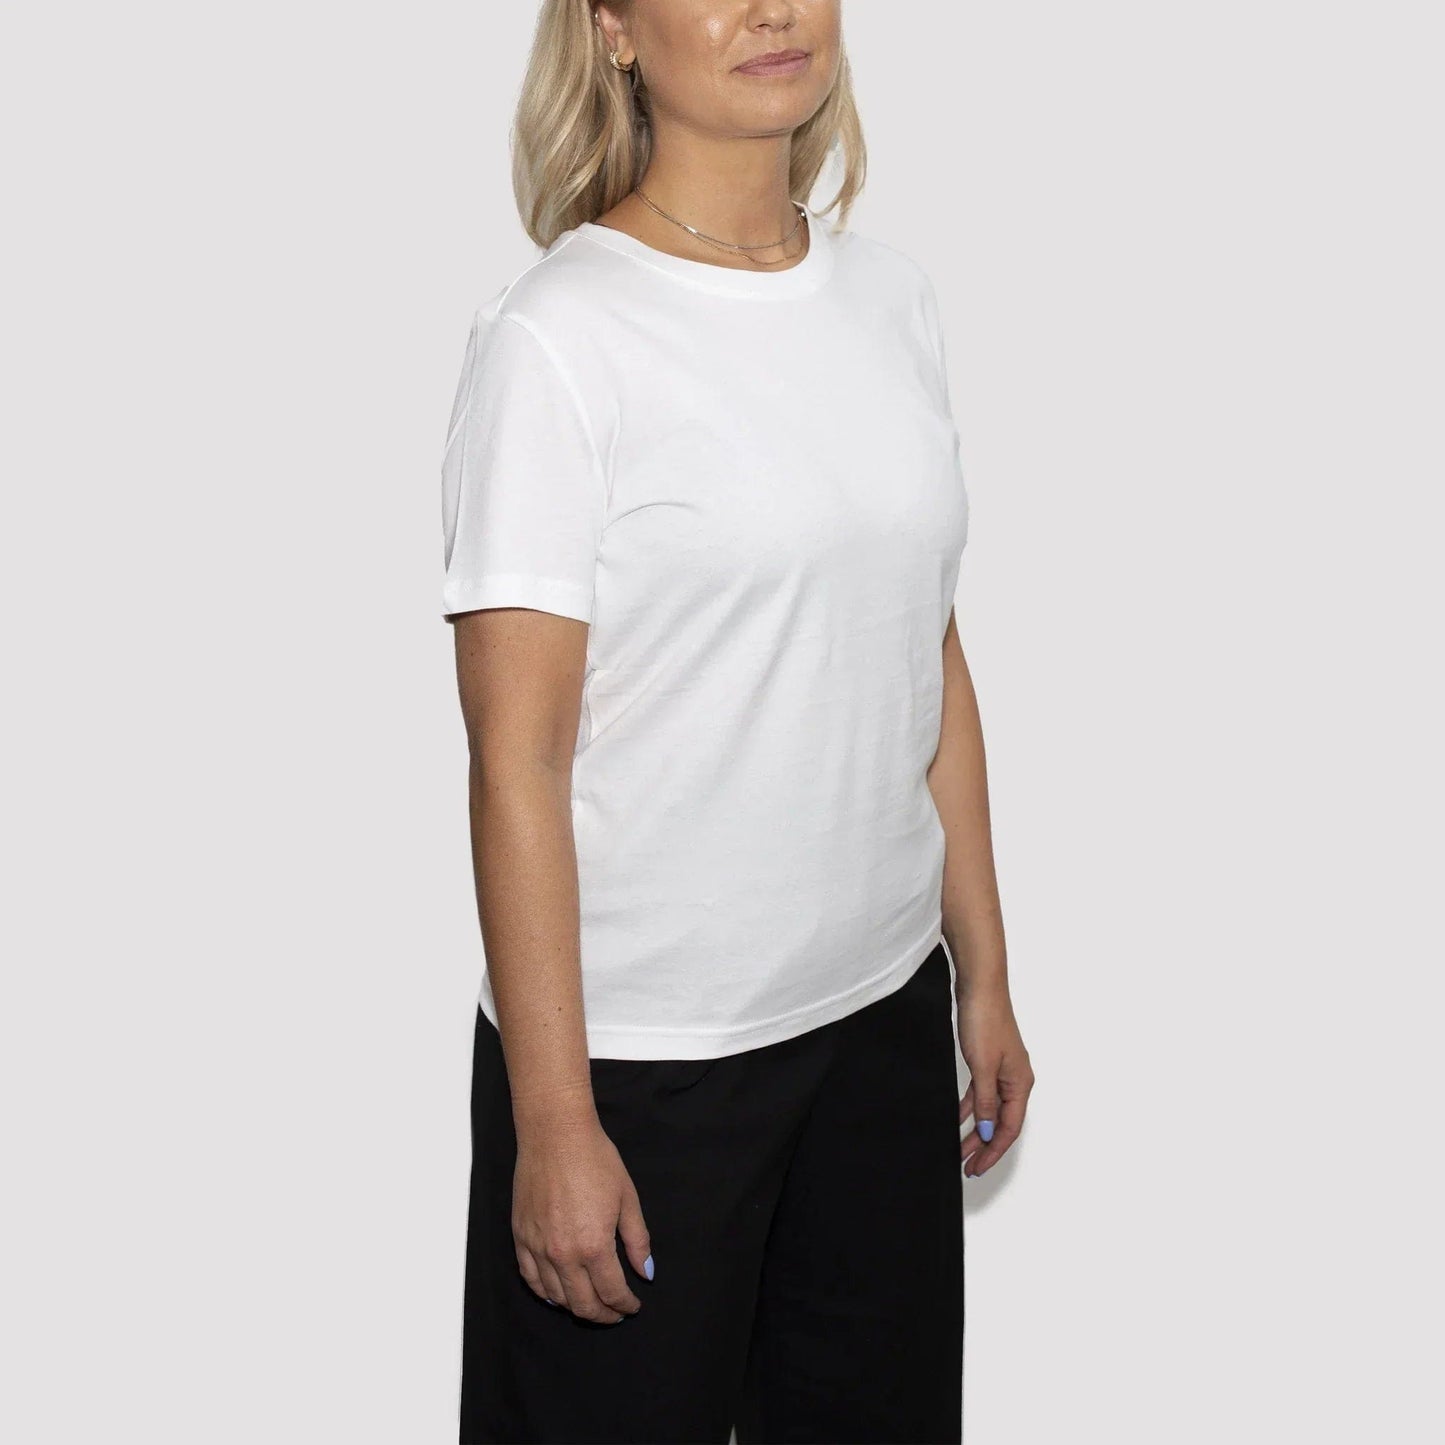 5er-Pack | Damen-T-Shirts, recycelte Baumwolle, Weiß